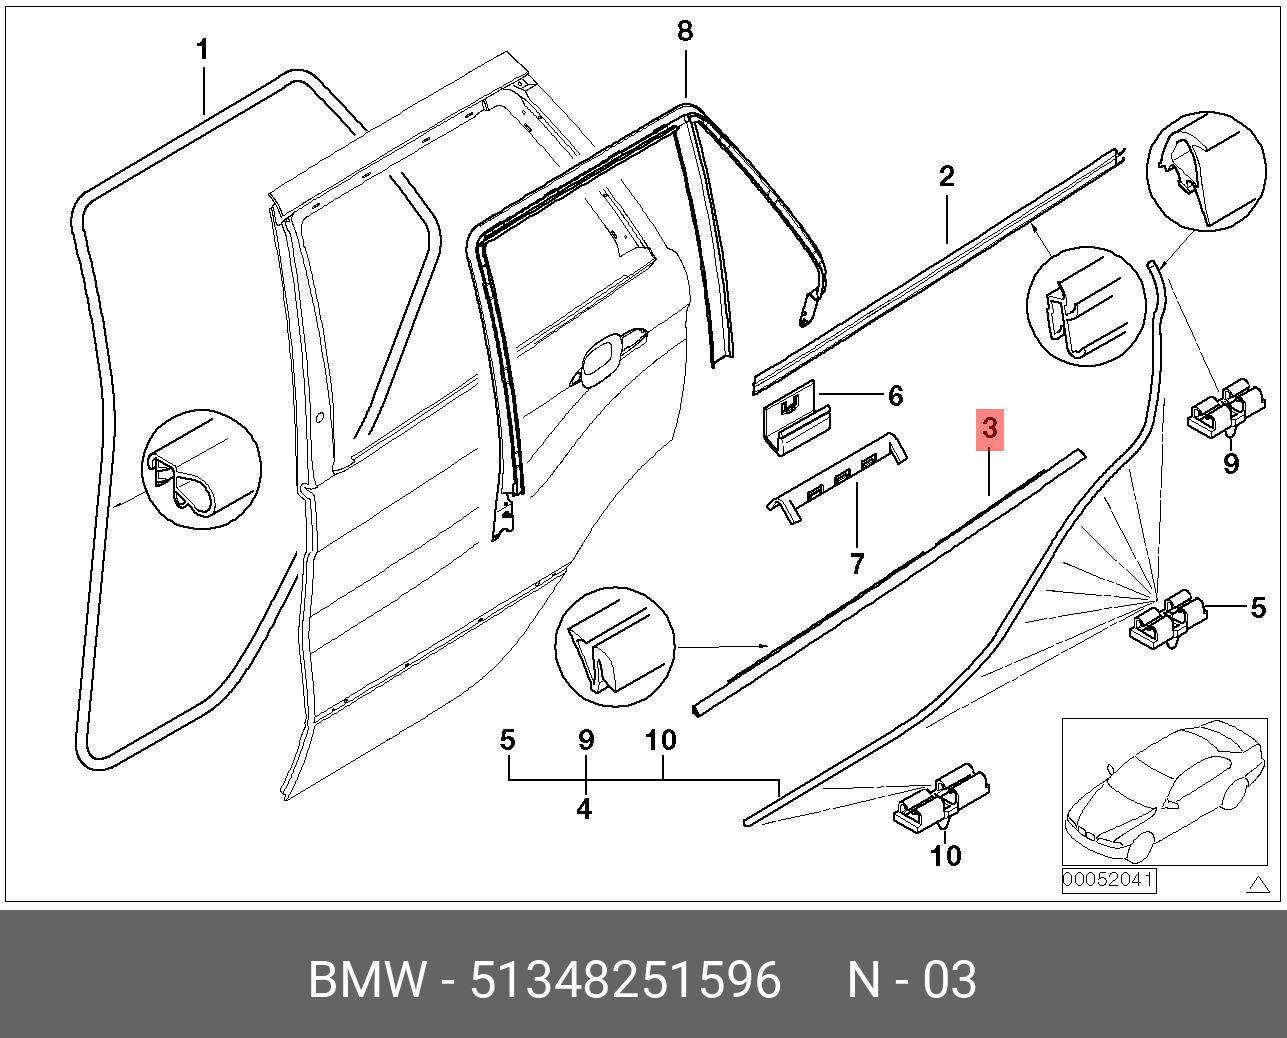 Задняя дверь бмв х5 е53. Уплотнитель стекла двери БМВ е53. Уплотнитель стекла двери БМВ х5 е53. Накладка оконной рамы двери BMW e53. Уплотнитель двери БМВ х5 е53.